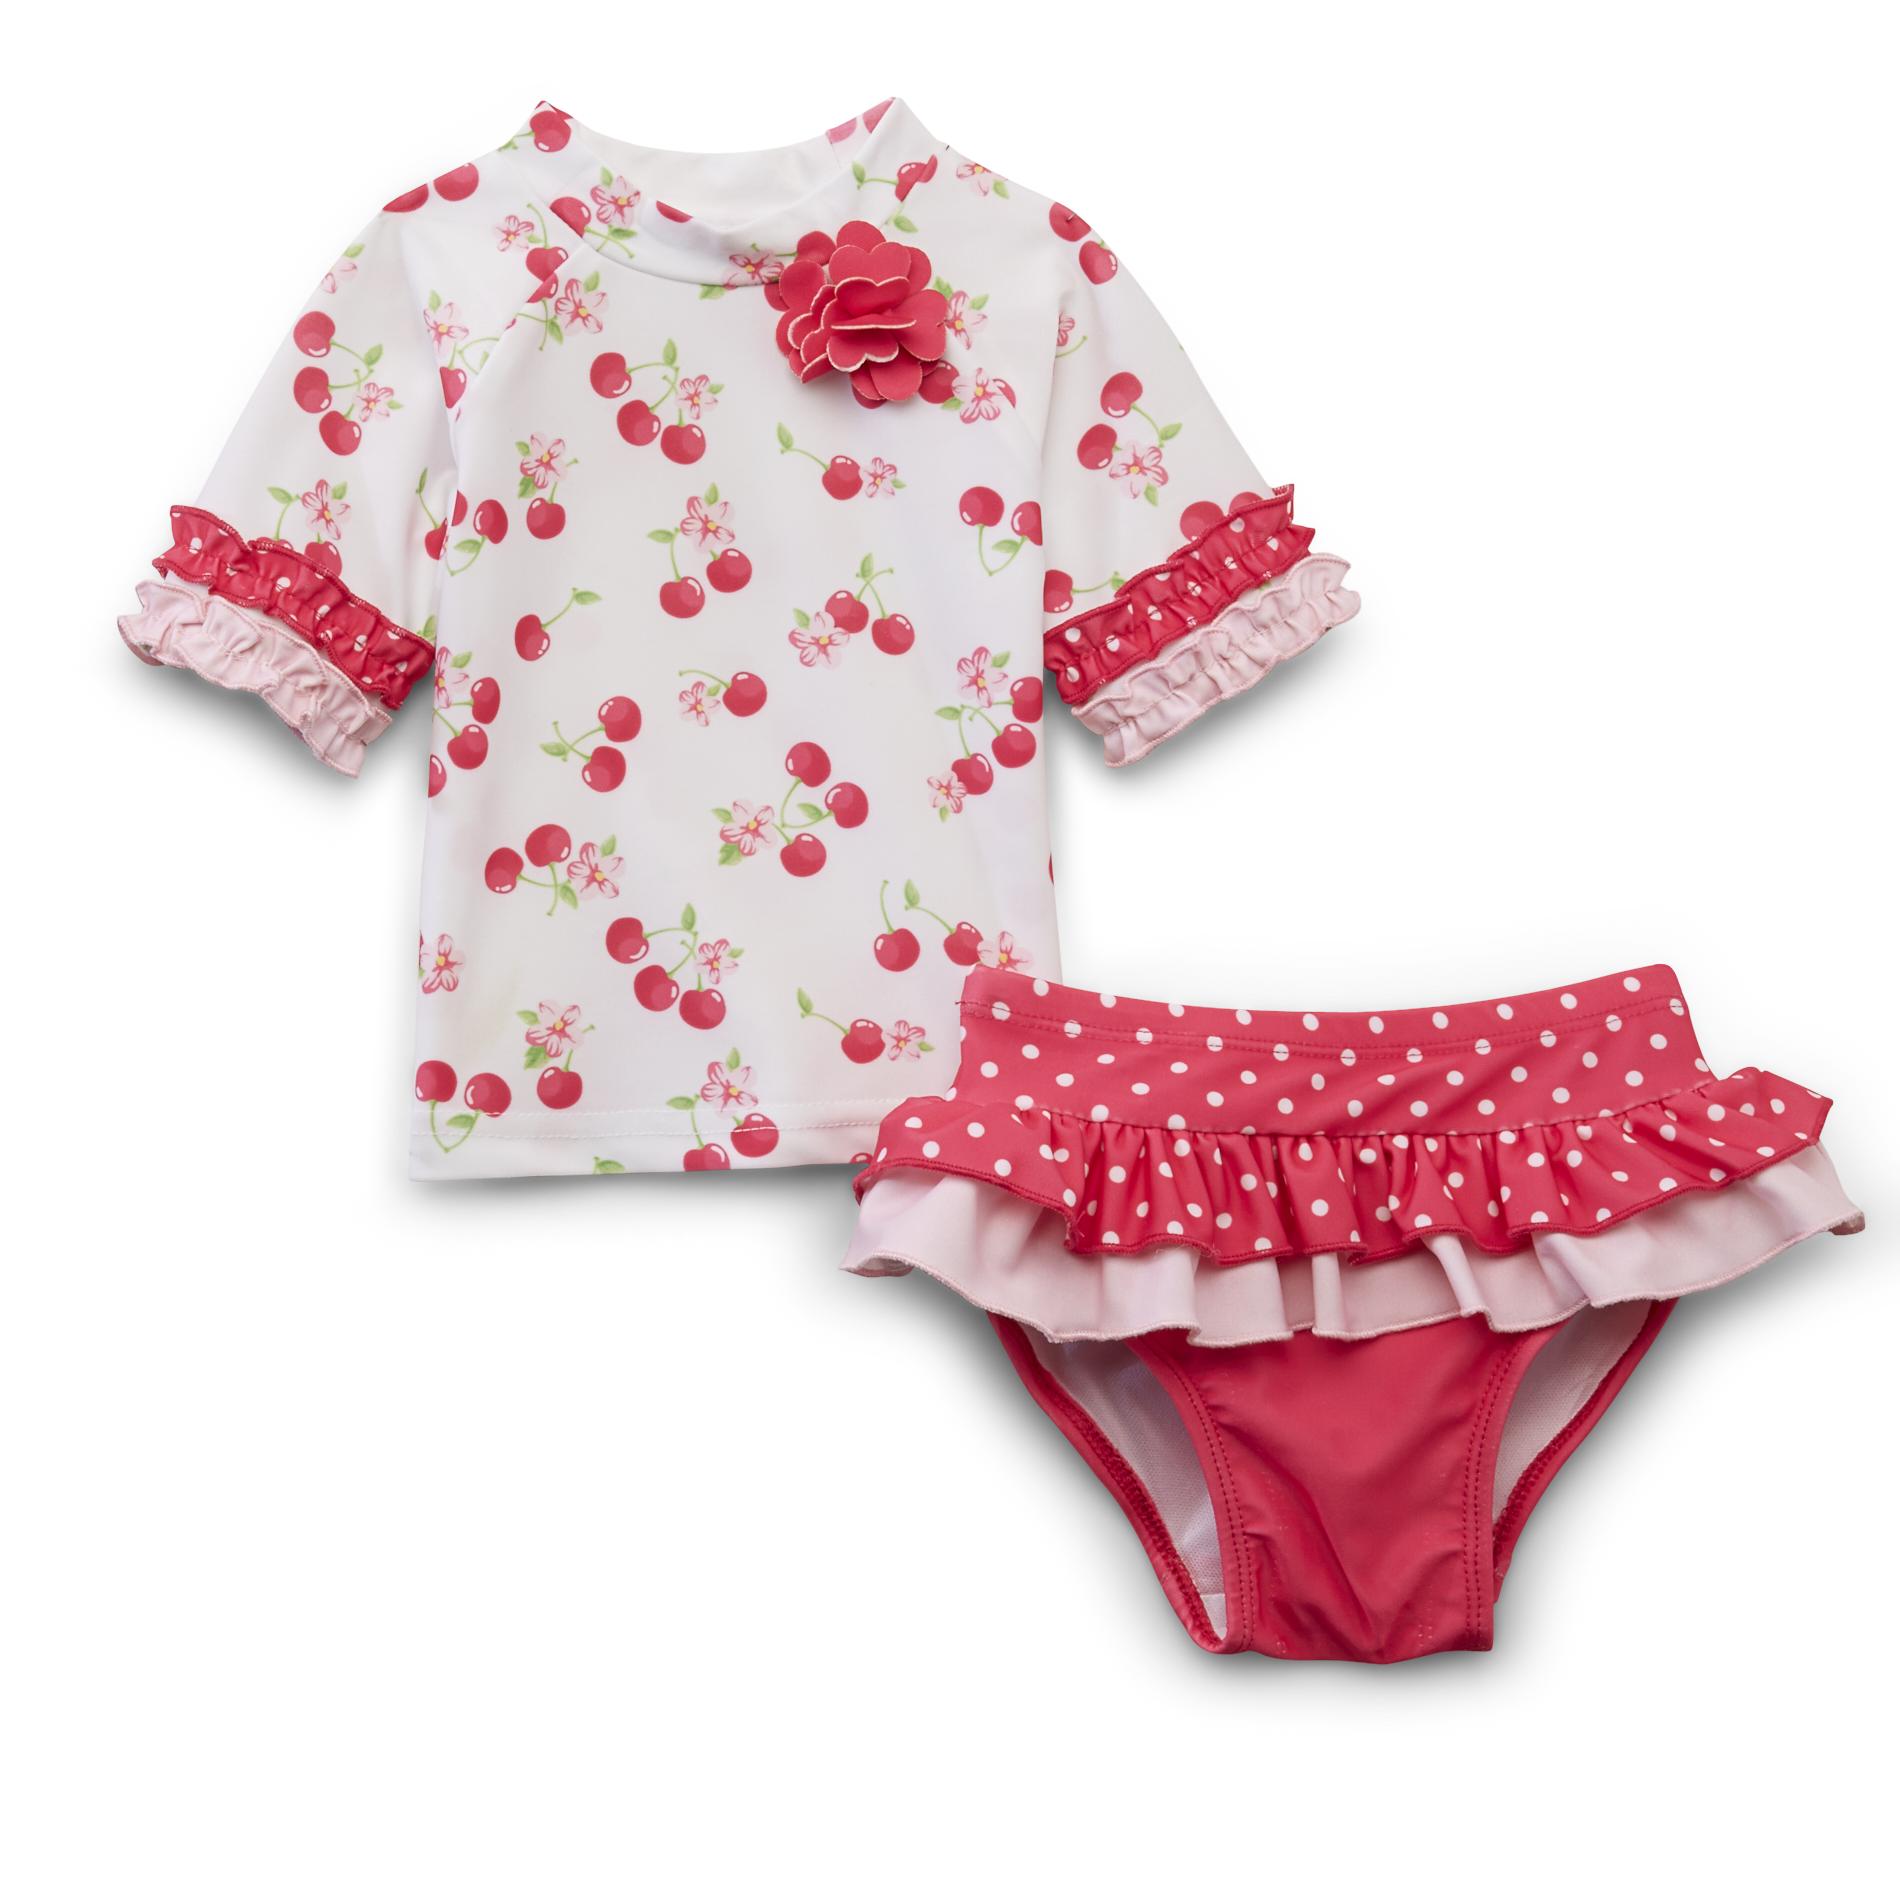 Small Wonders Newborn Girl's Rash Guard & Bikini Bottoms - Cherries & Polka Dots